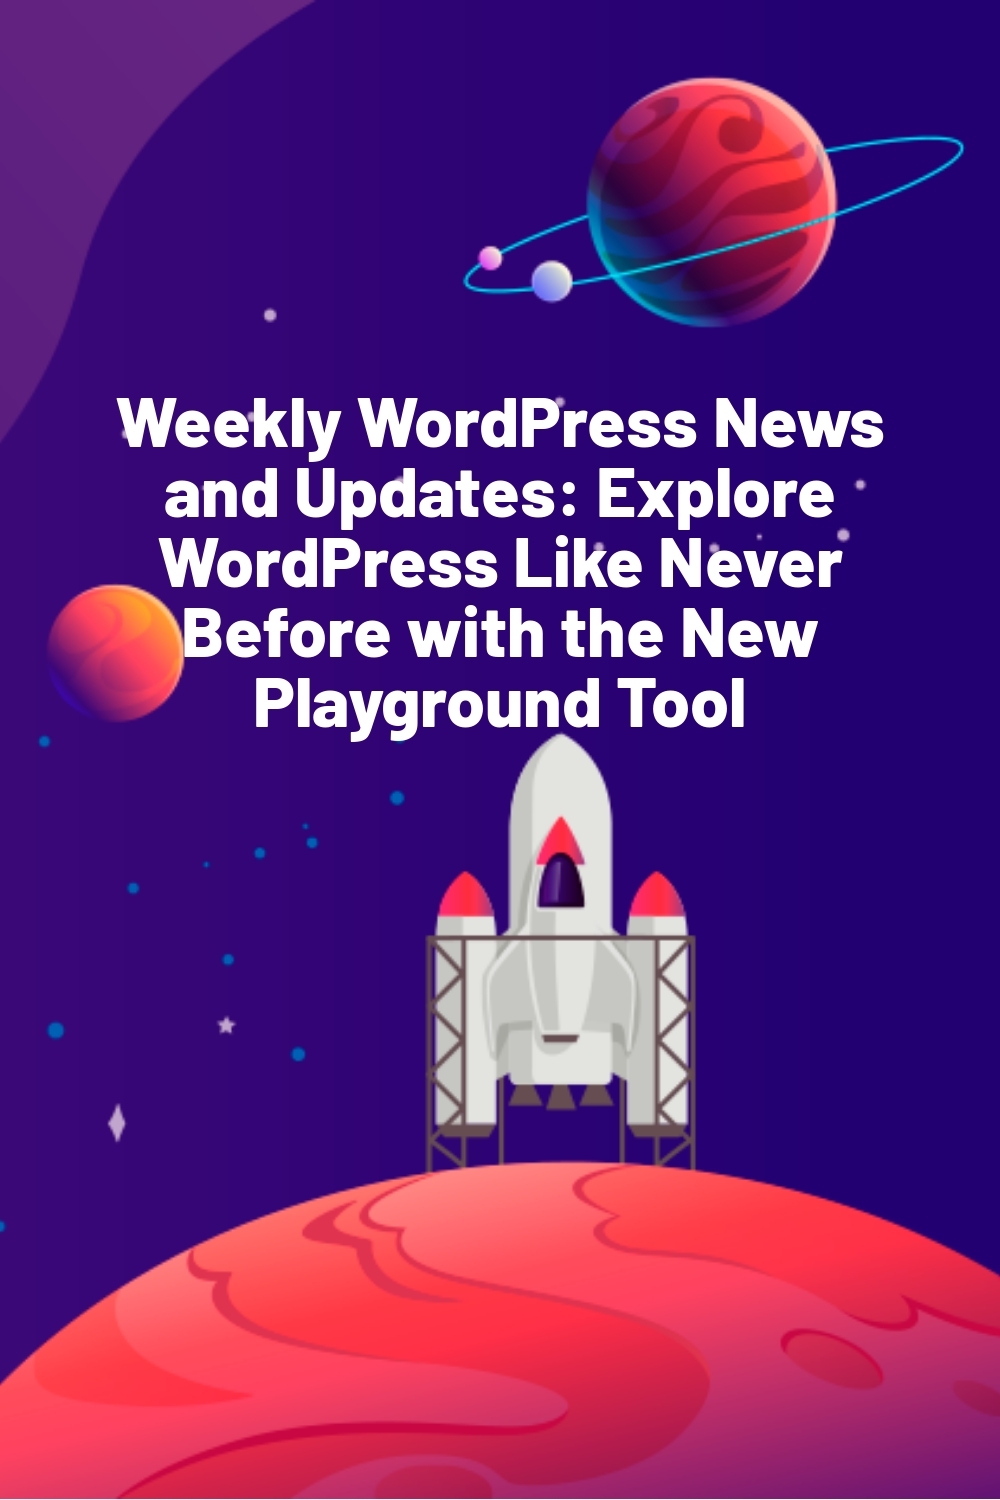 Weekly WordPress News and Updates: Explore WordPress Like Never Before with the New Playground Tool